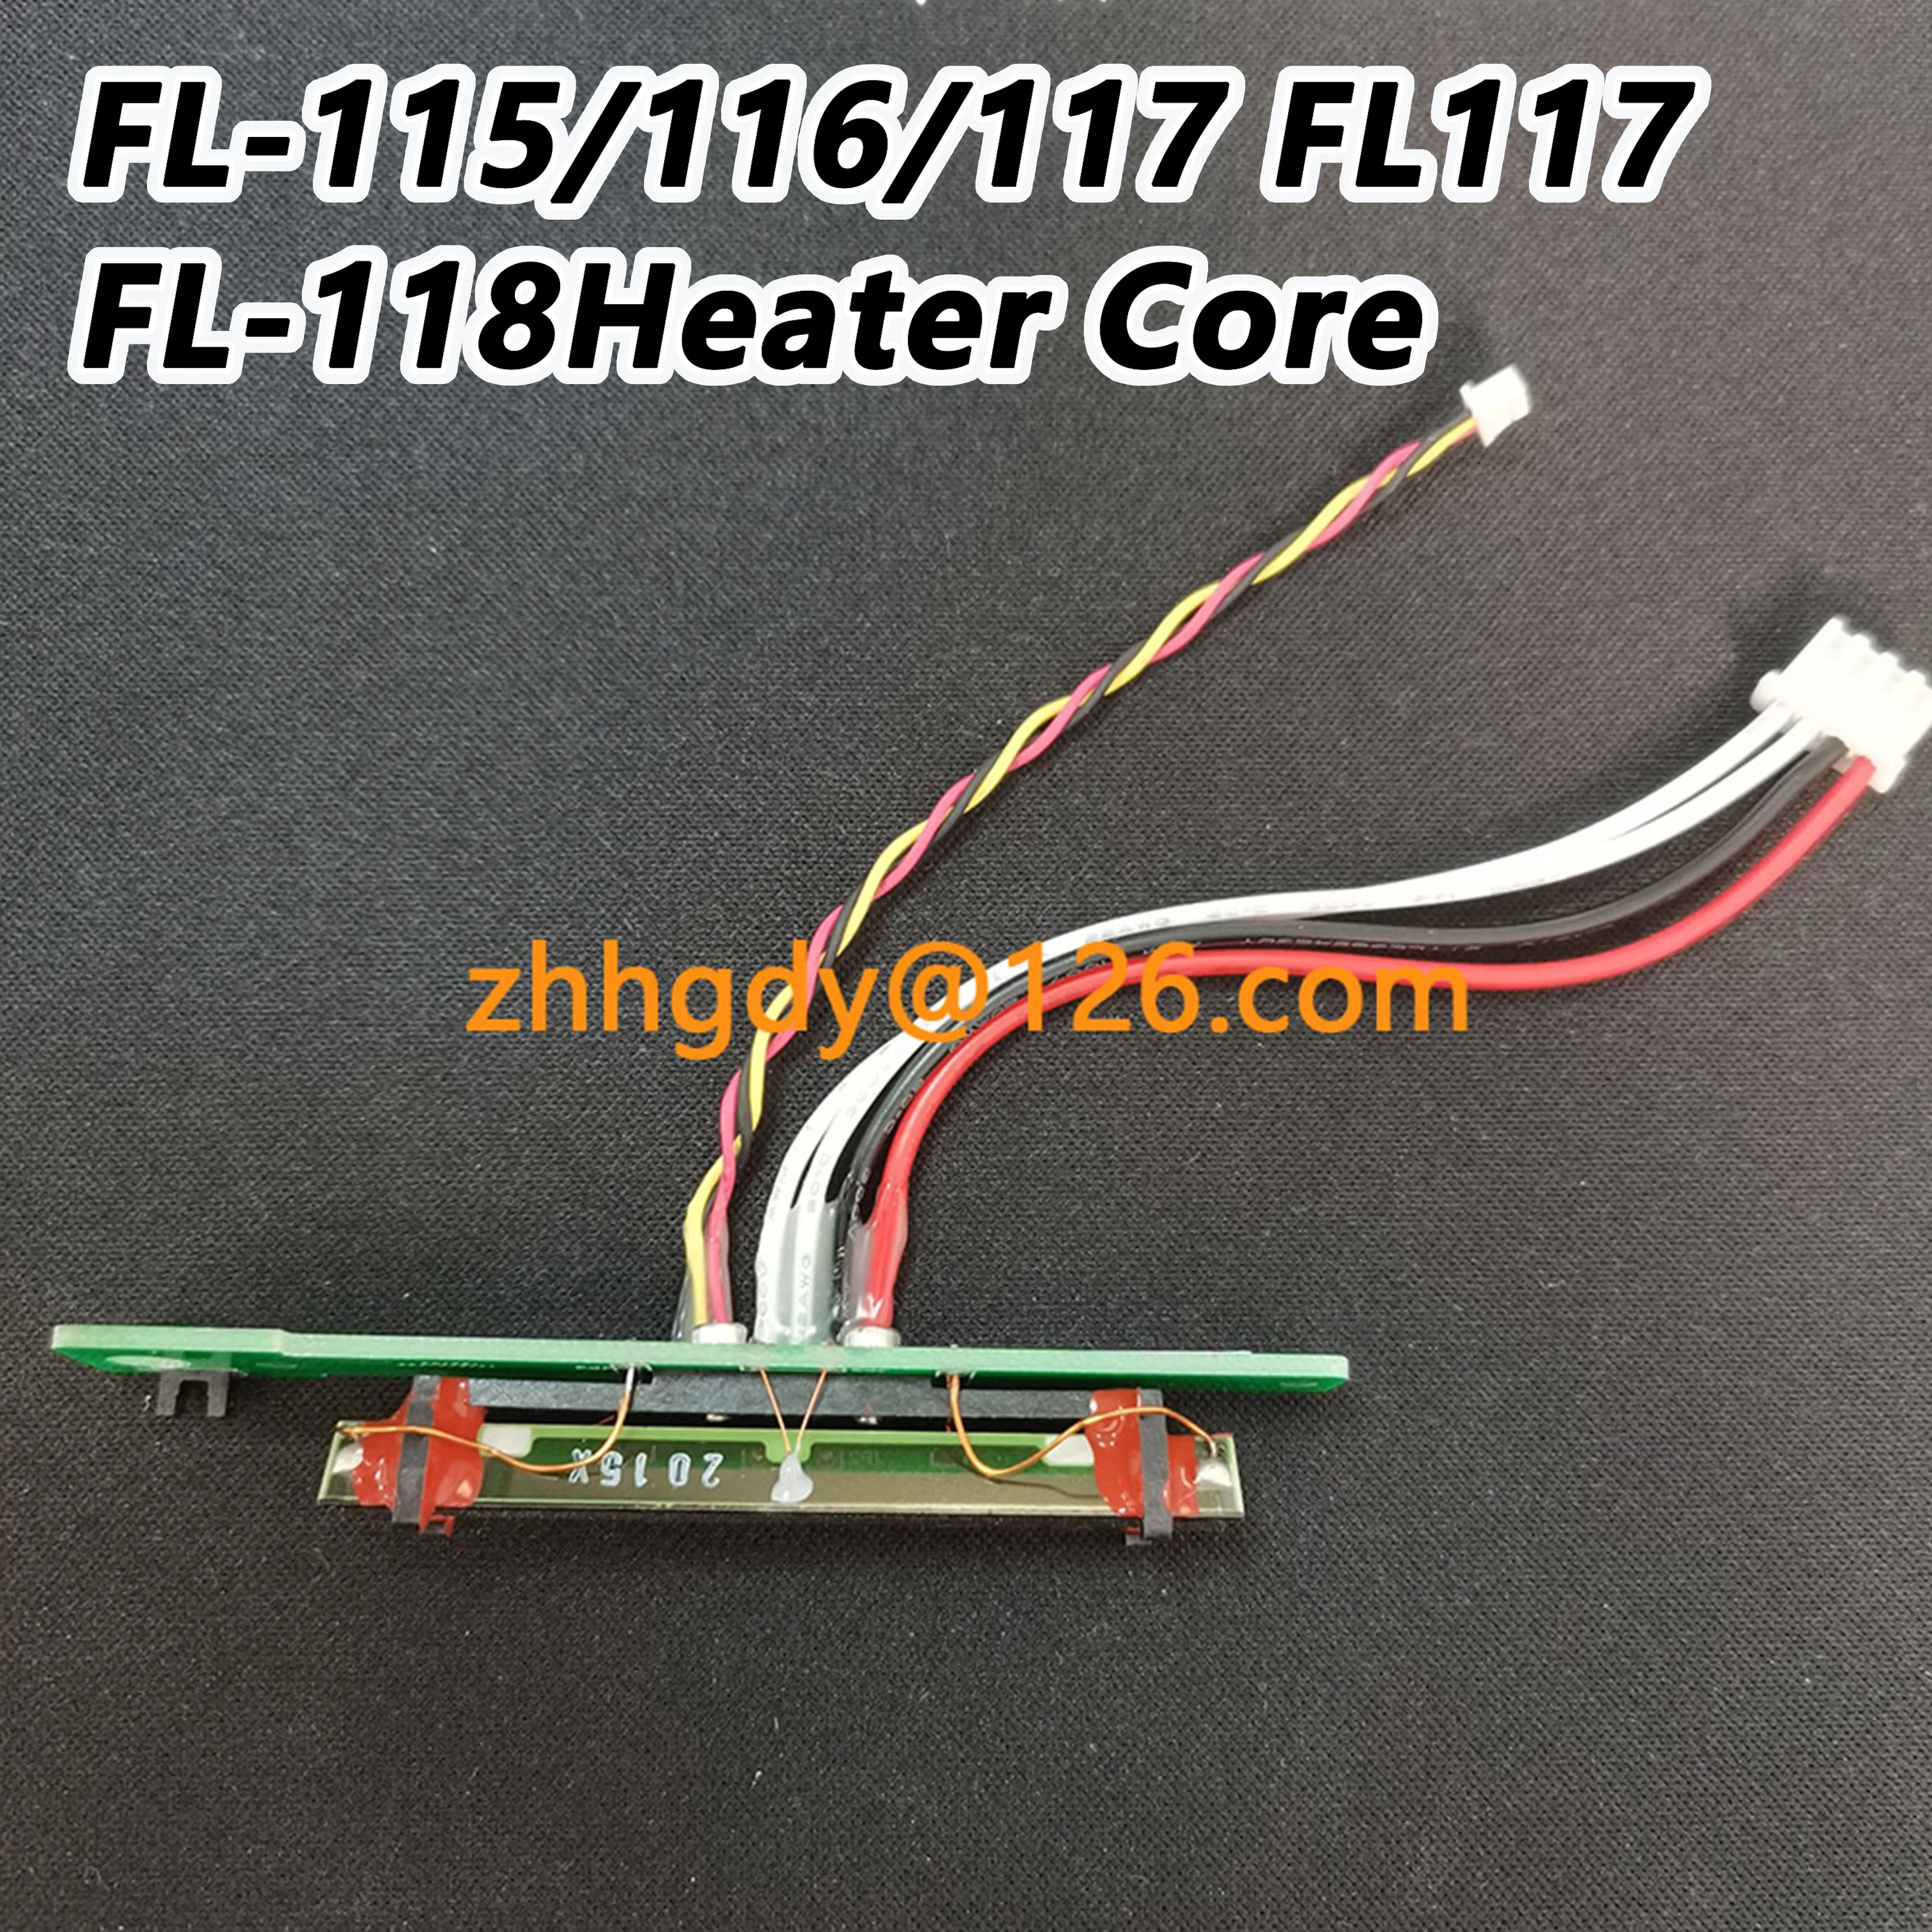 

Original Fiberlink FL-115/116/117 Heating CoreFor FL117 FL-118 Fiber Fusion Splicer Heater Core